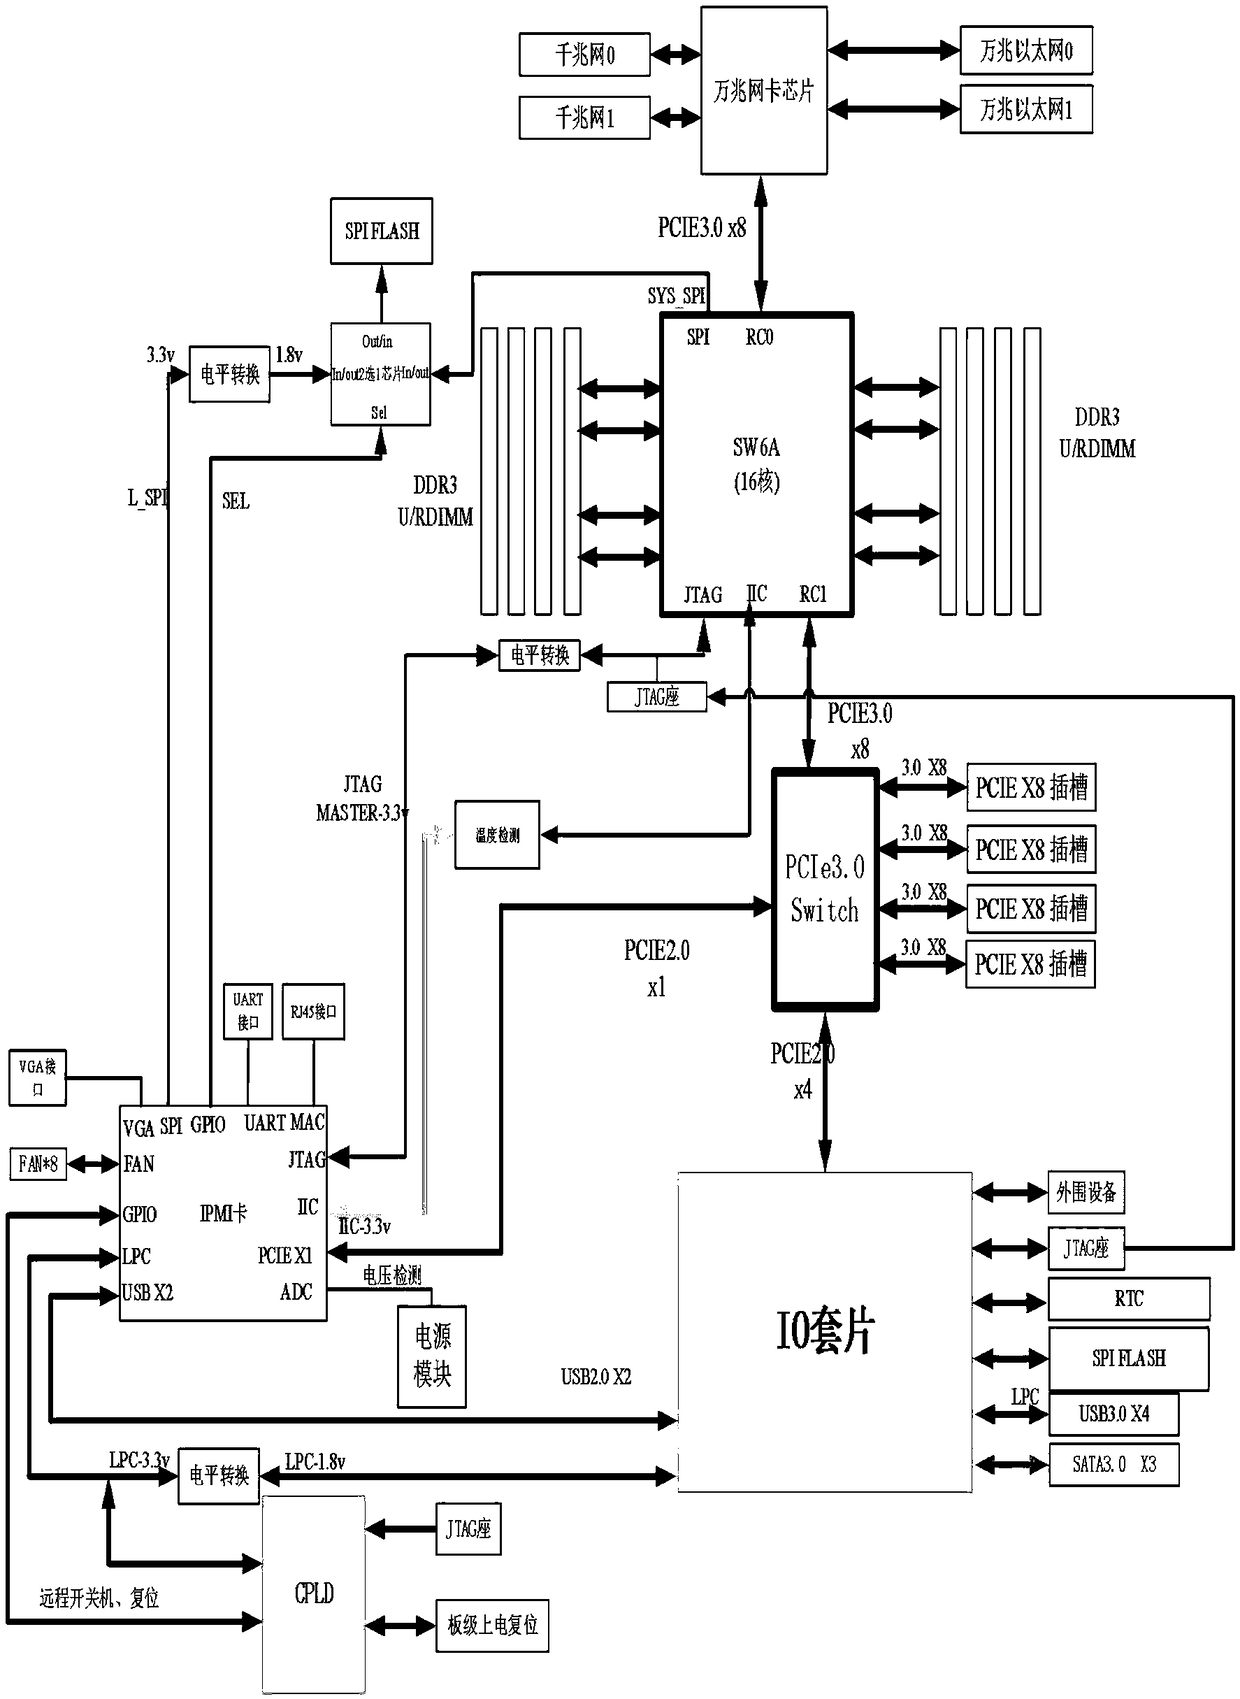 Server mainboard based on Shenwei 1621 processor